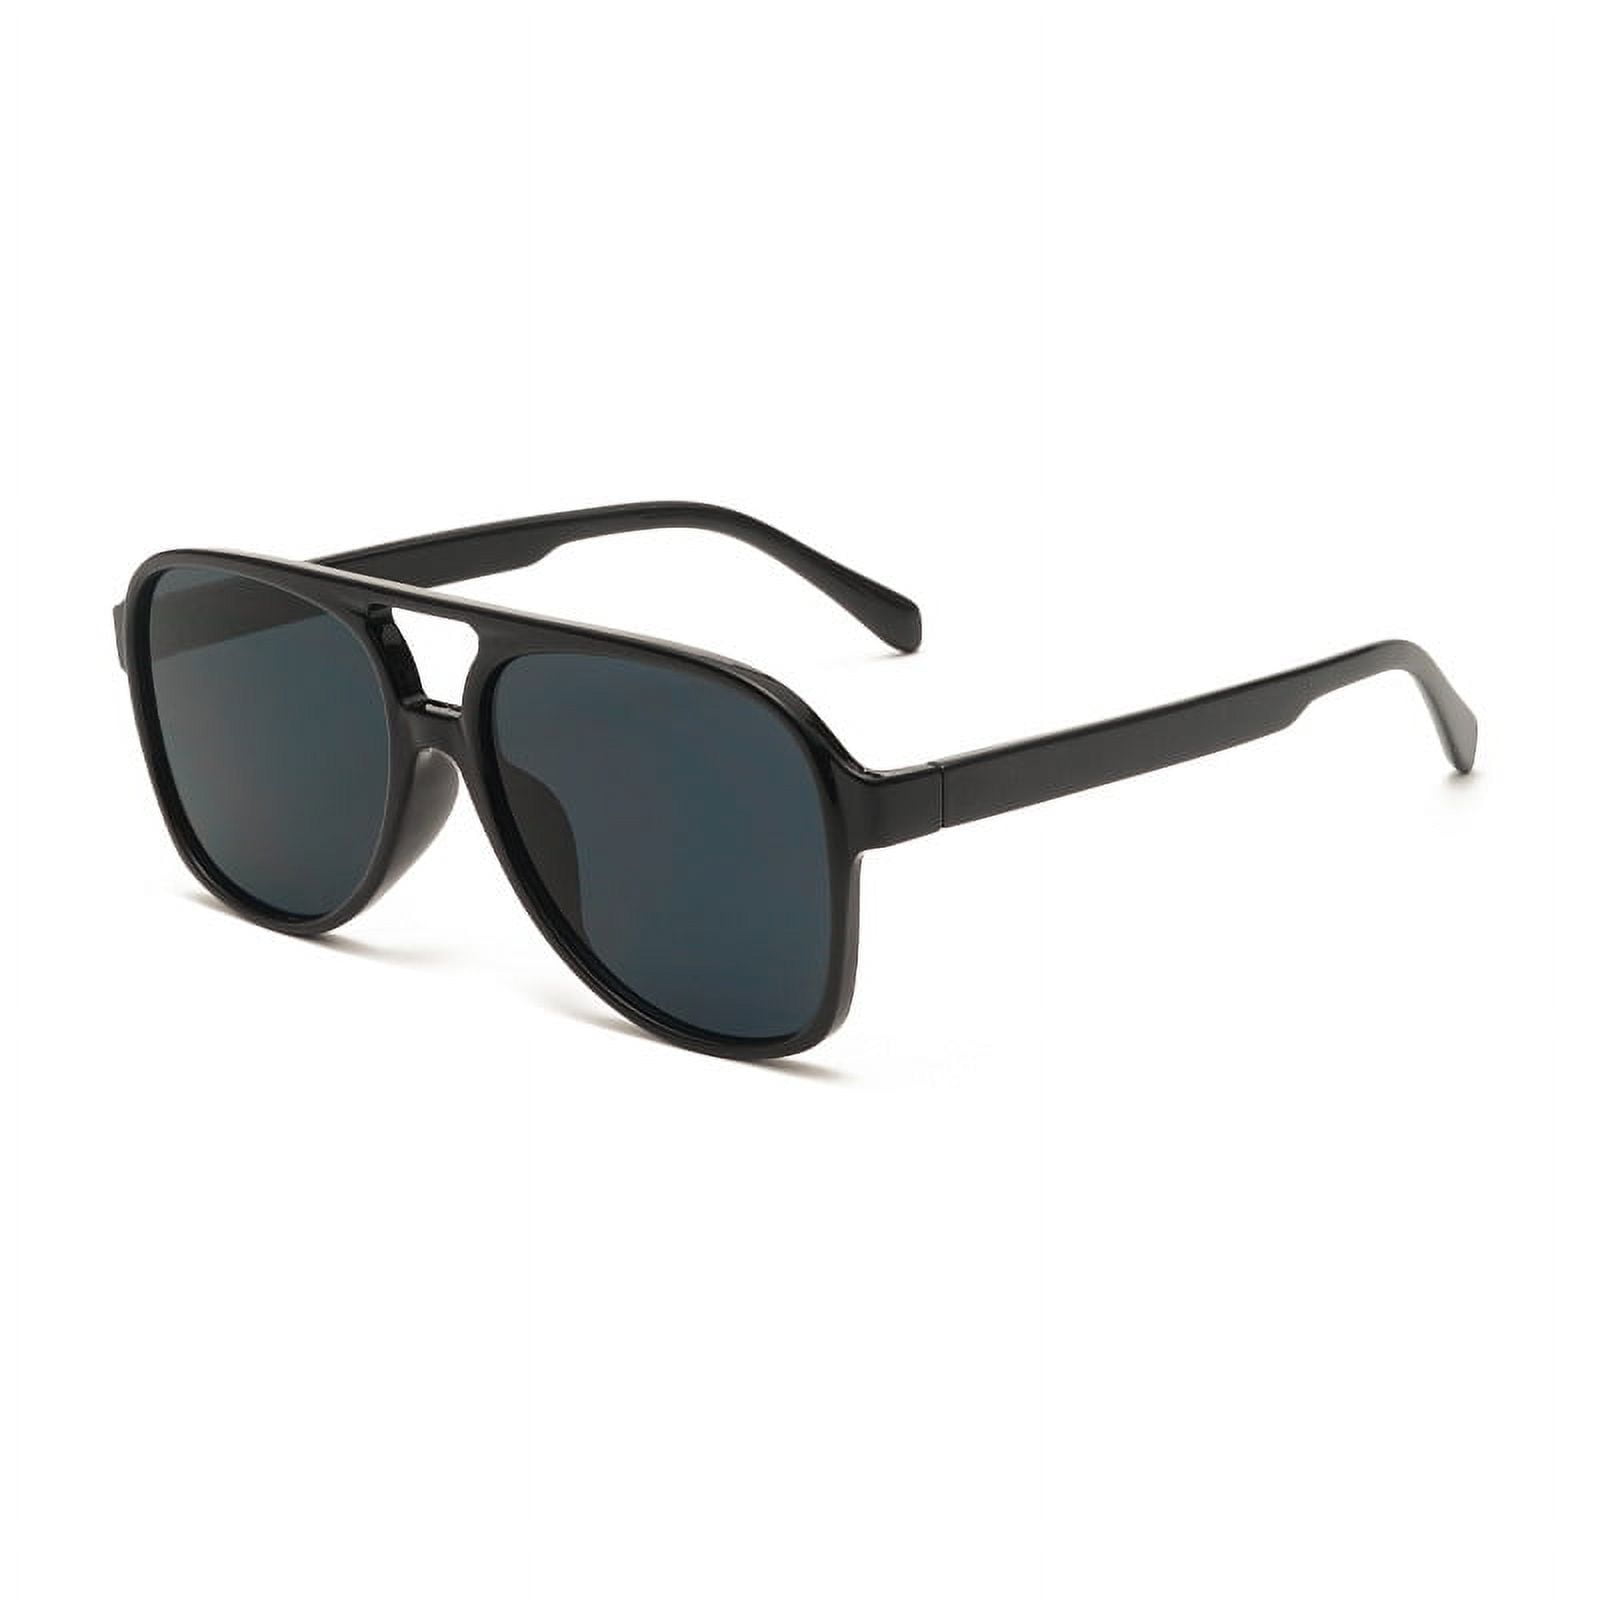 Sunglasses for Women Men Polarized uv Protection Fashion Vintage Round  Classic Retro Aviator Mirrored Sun glasses 